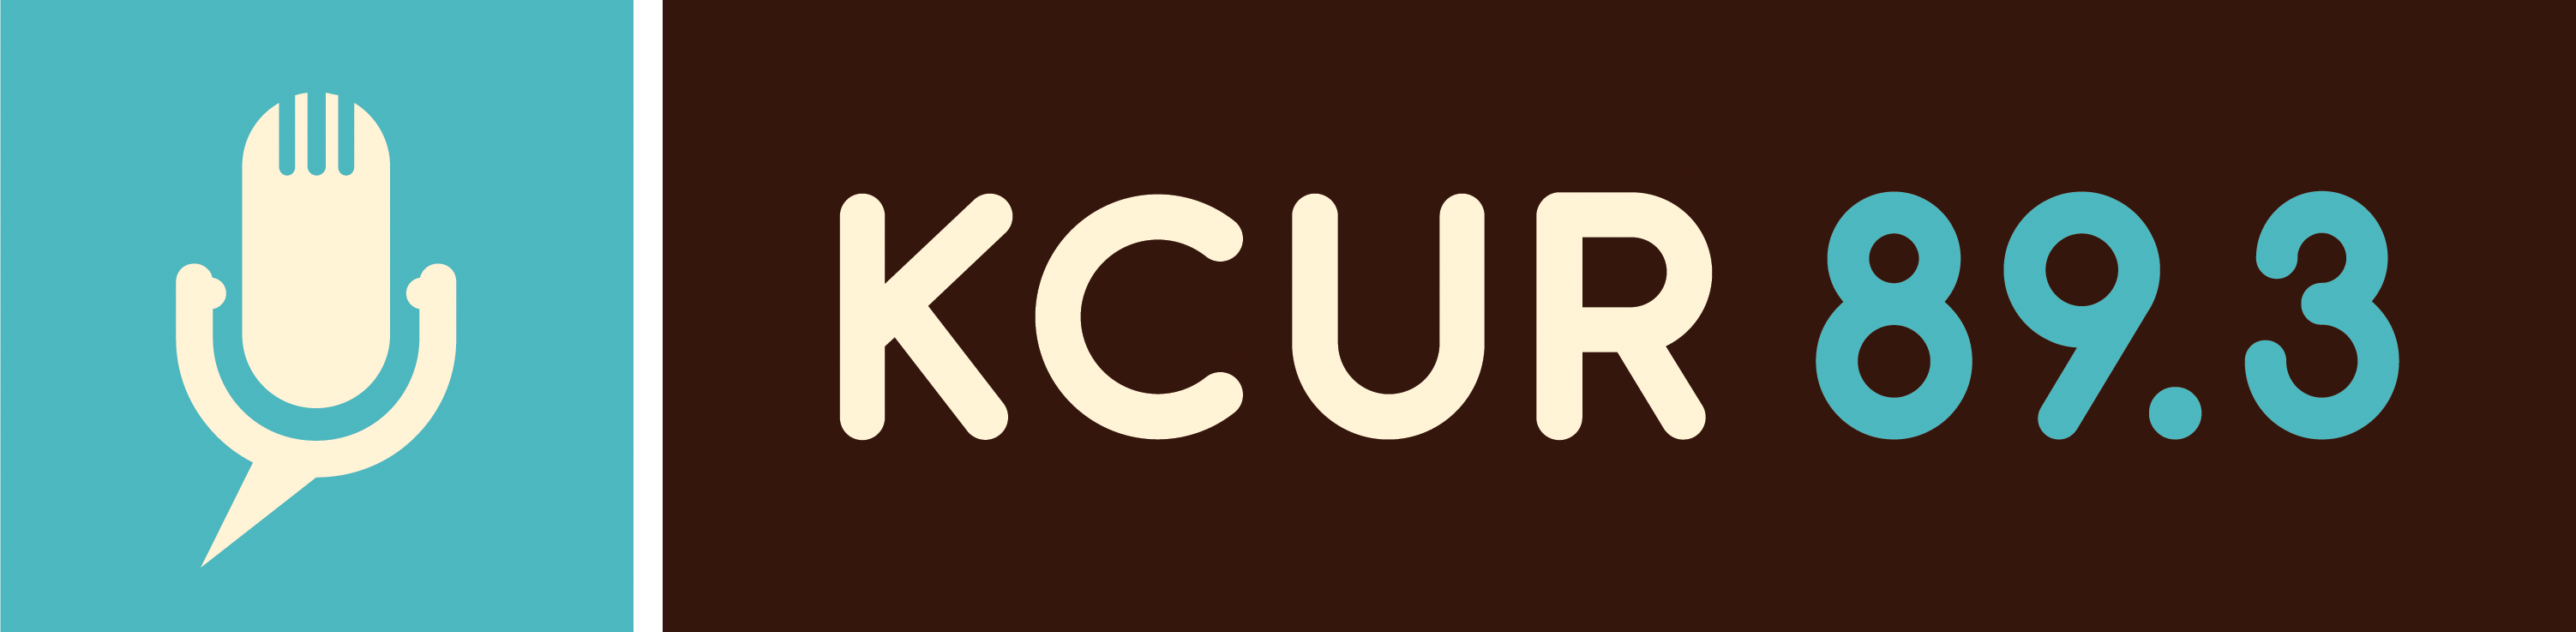 UMKC School of Medicine Logo - KCUR